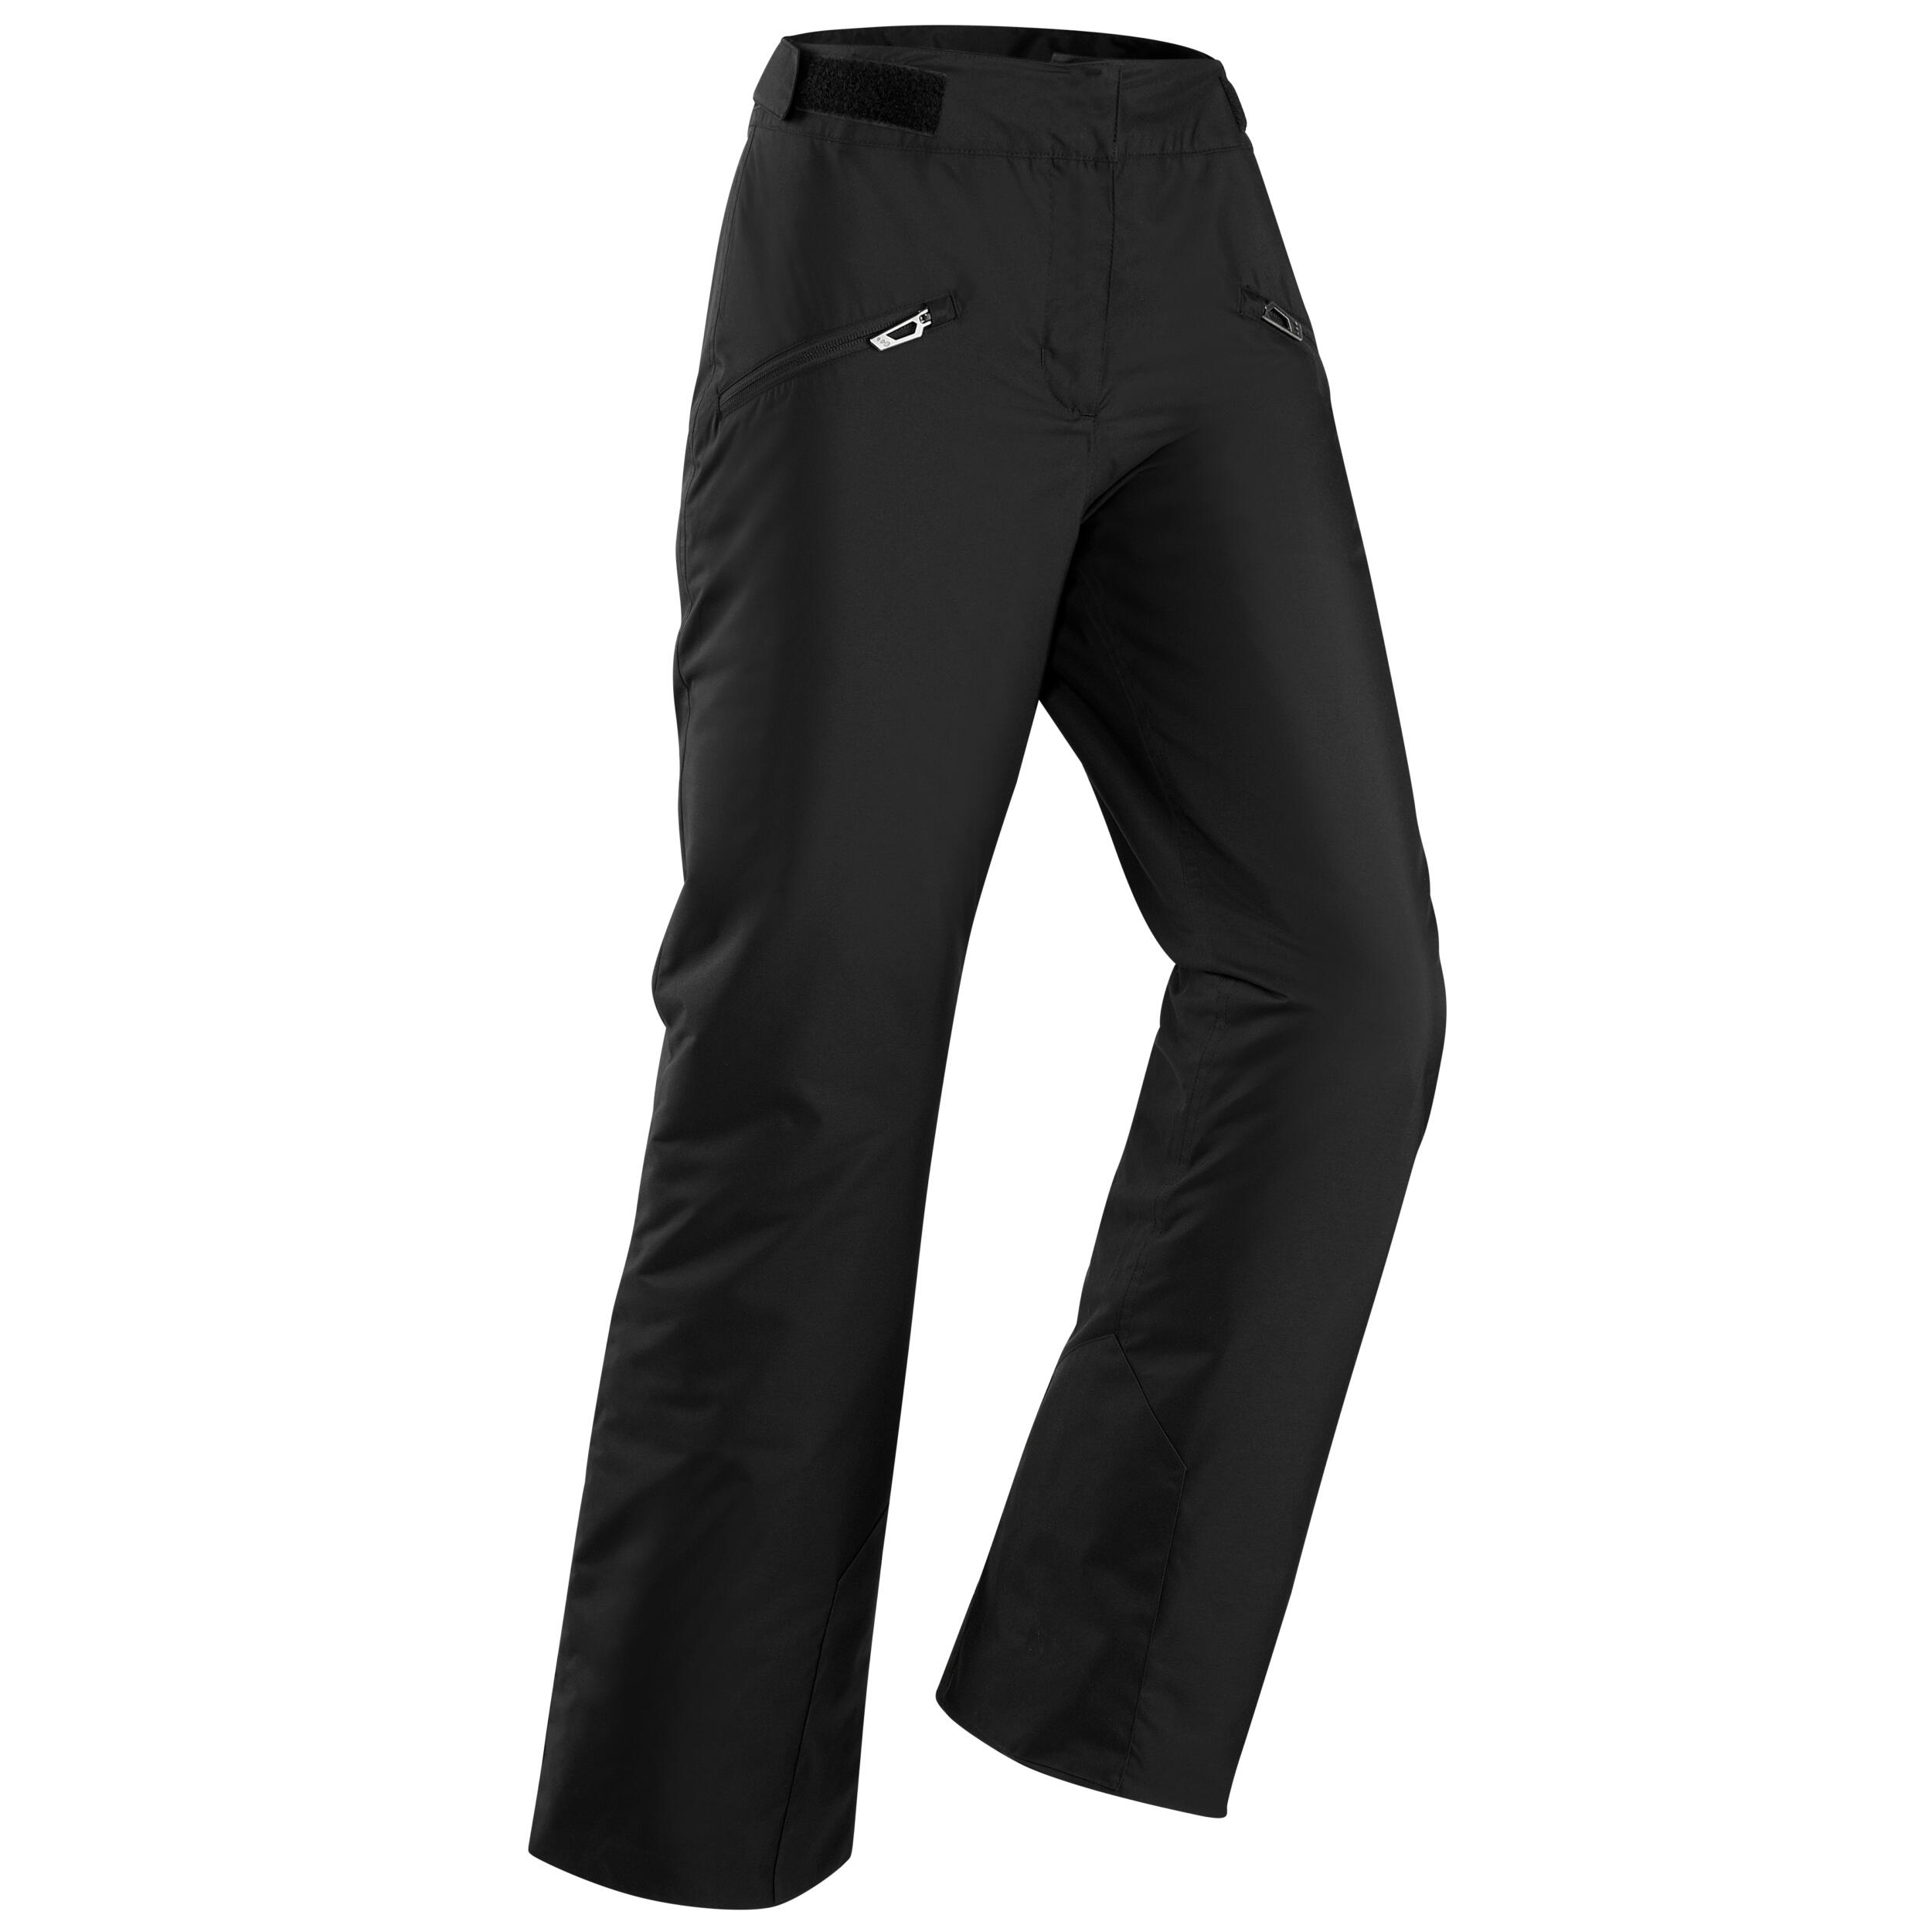 Women's Yoga Bottoms - Black/Grey | Yoga Pants for Women | Decathlon